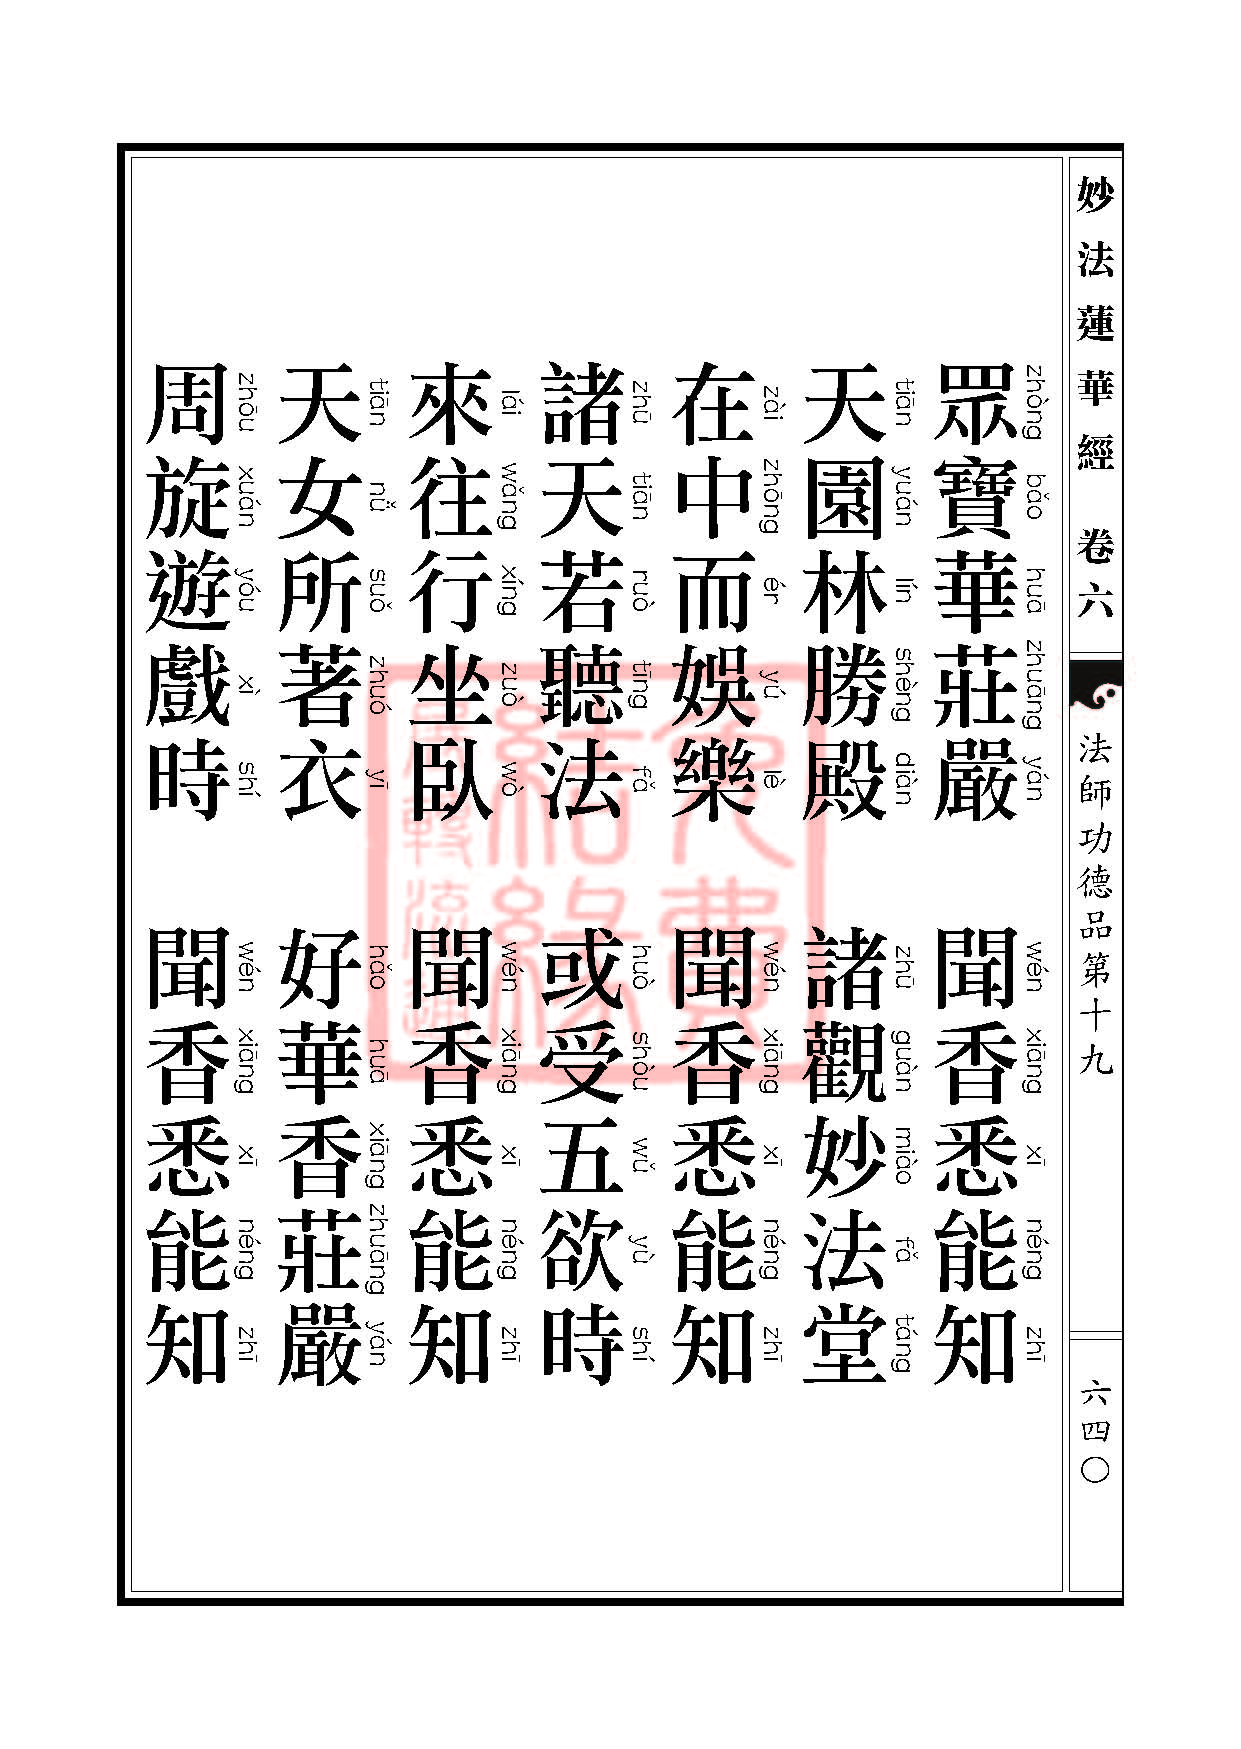 Book_FHJ_HK-A6-PY_Web_页面_640.jpg